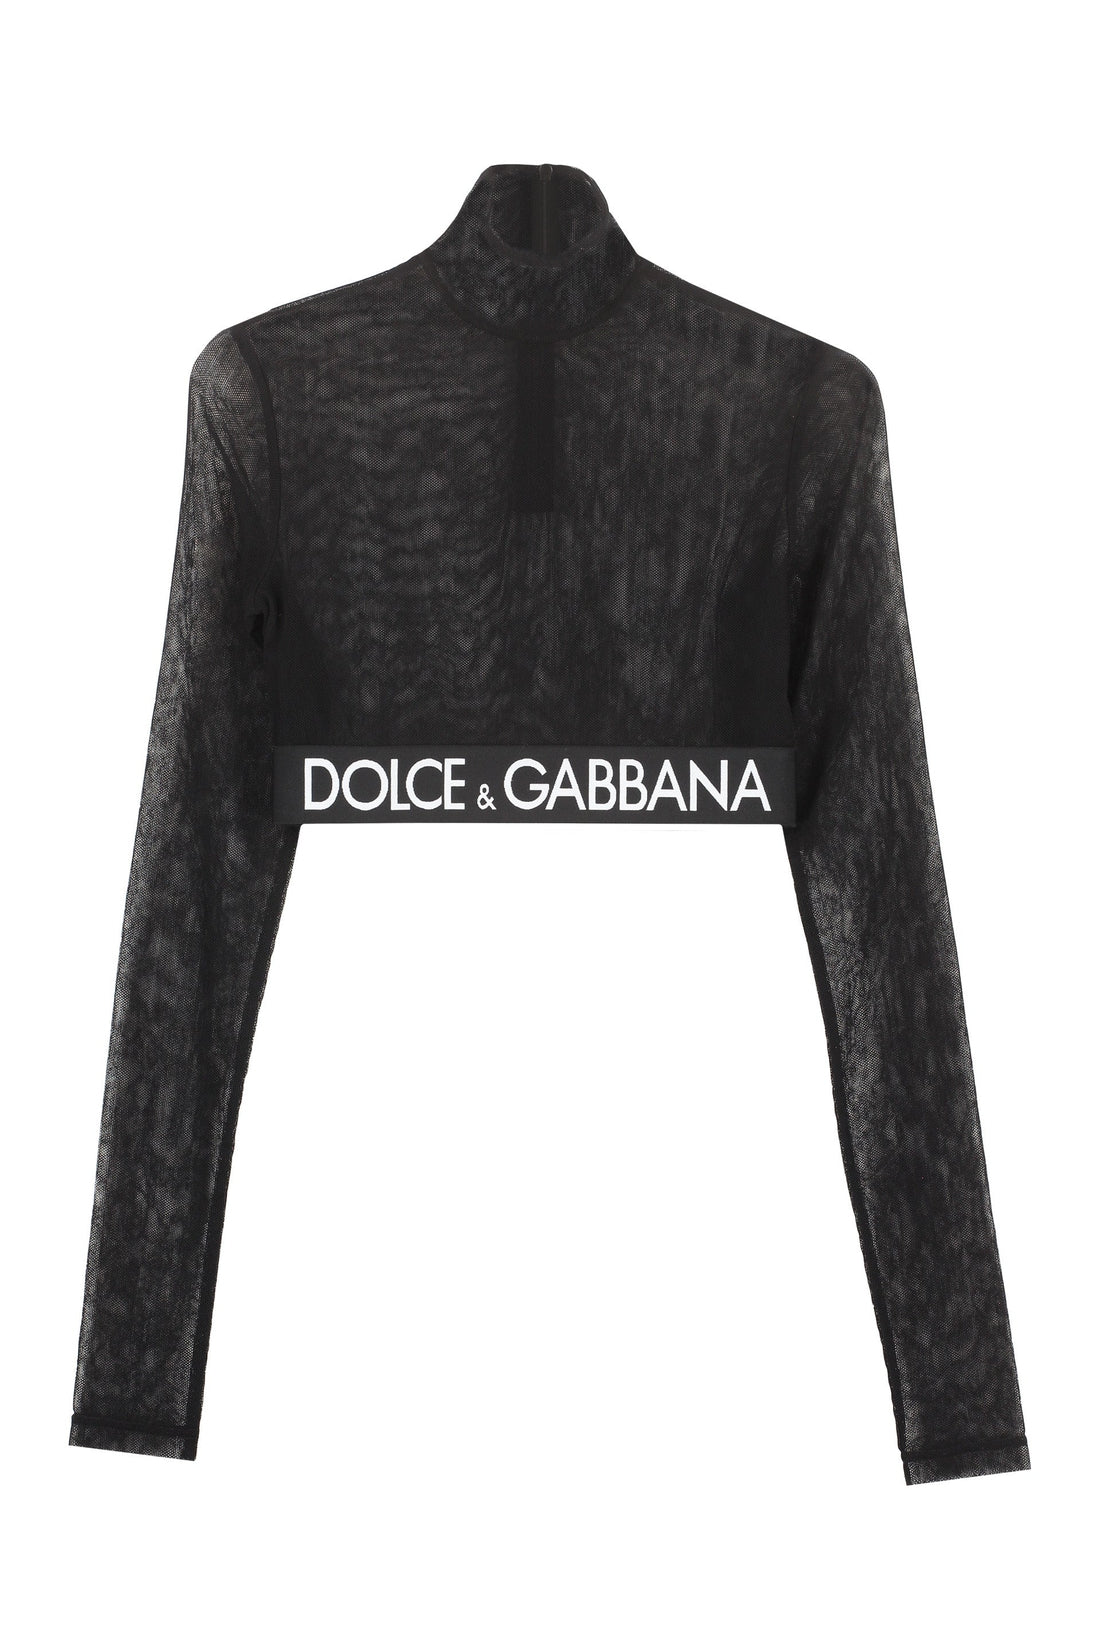 Dolce & Gabbana-OUTLET-SALE-Long sleeve crop top-ARCHIVIST